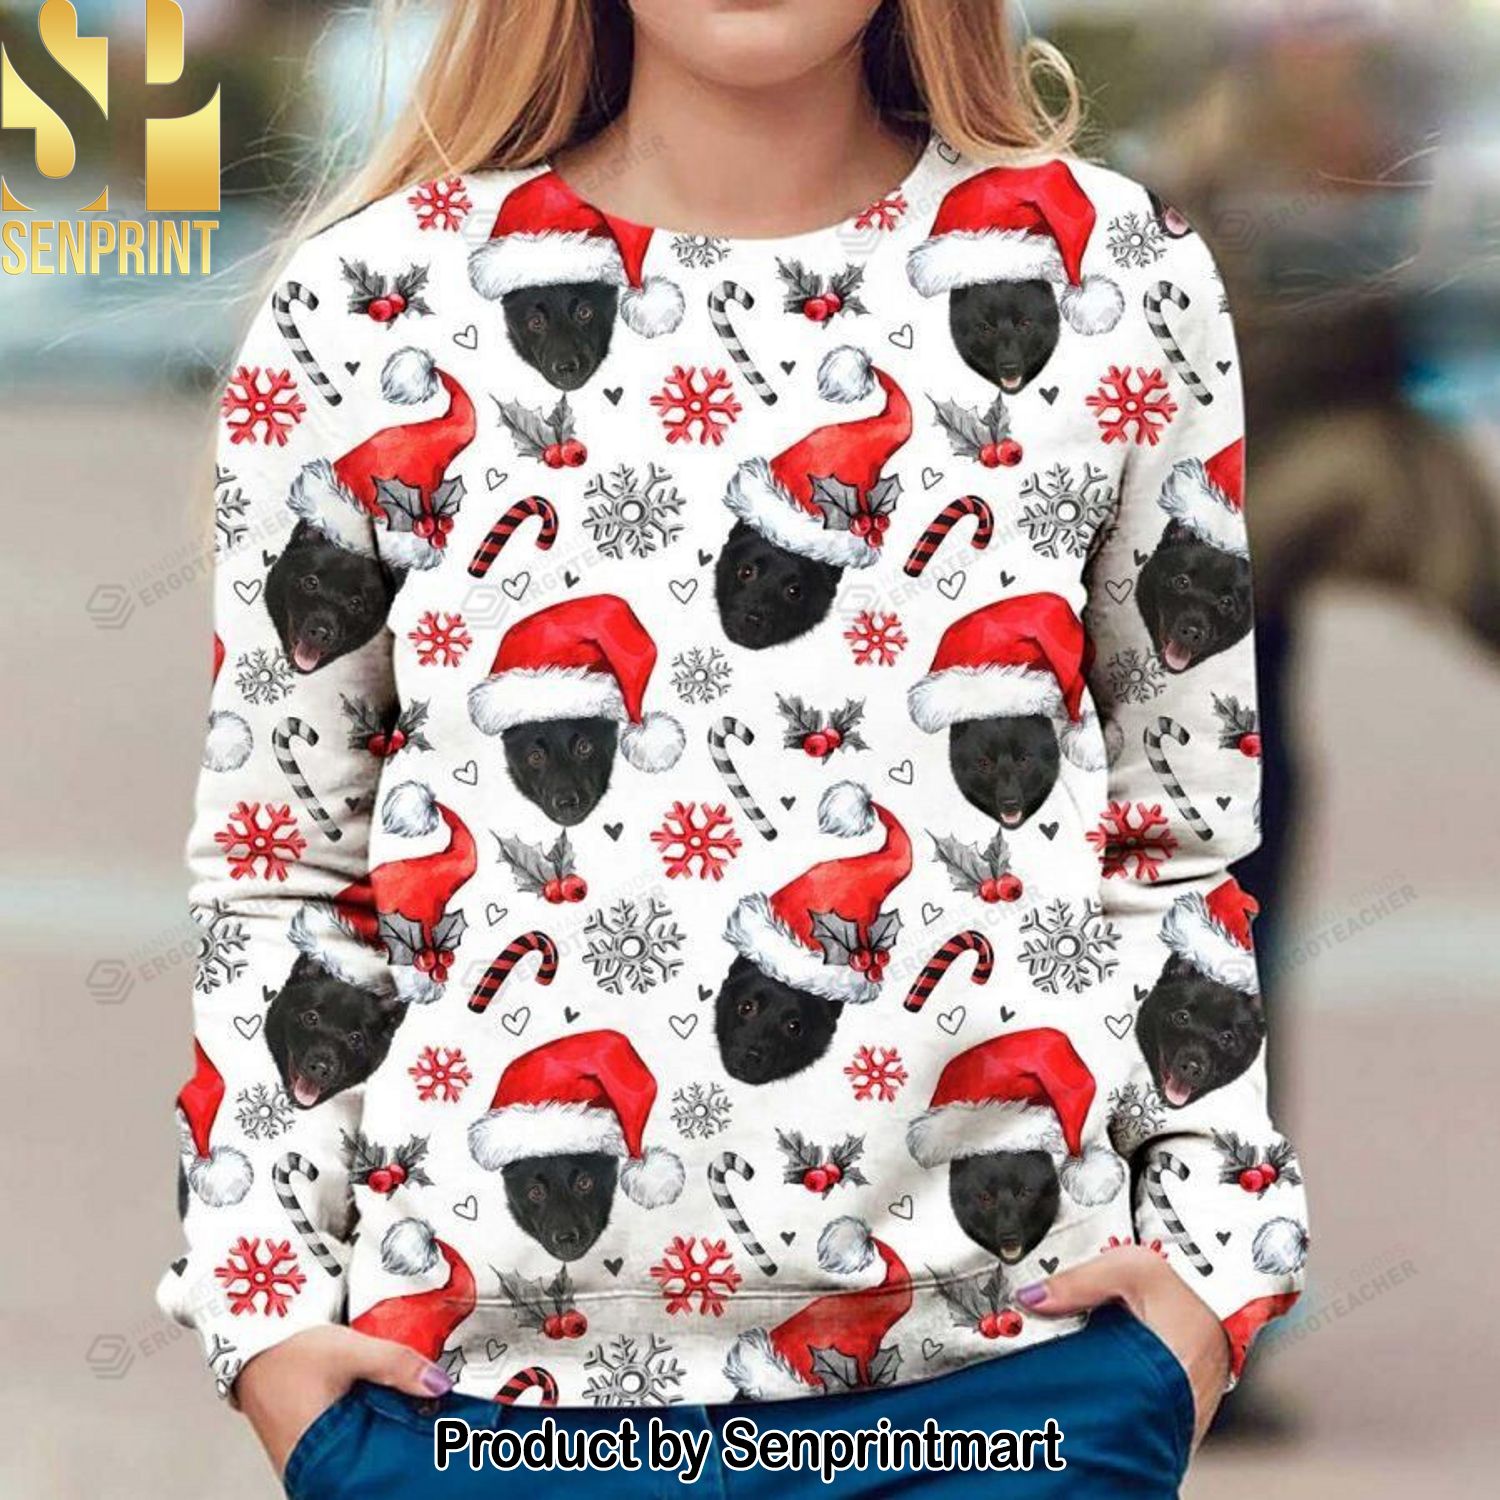 Schipperke Dog Ugly Christmas Wool Knitted Sweater